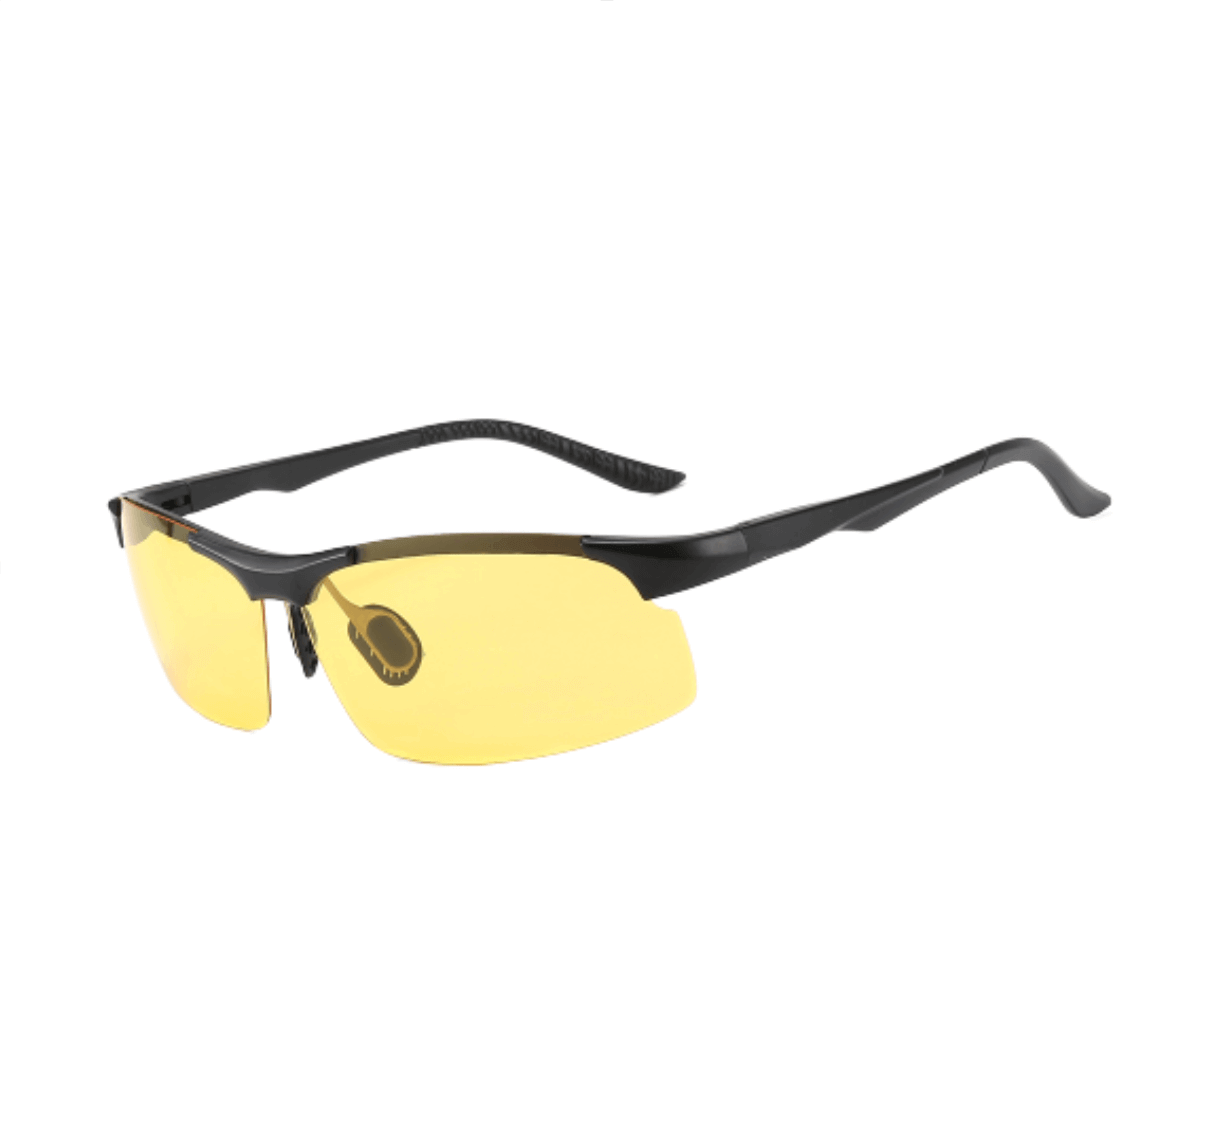 Sports Sunglasses Manufacturers - Sunglasses Supplier China_Driving Sunglasses